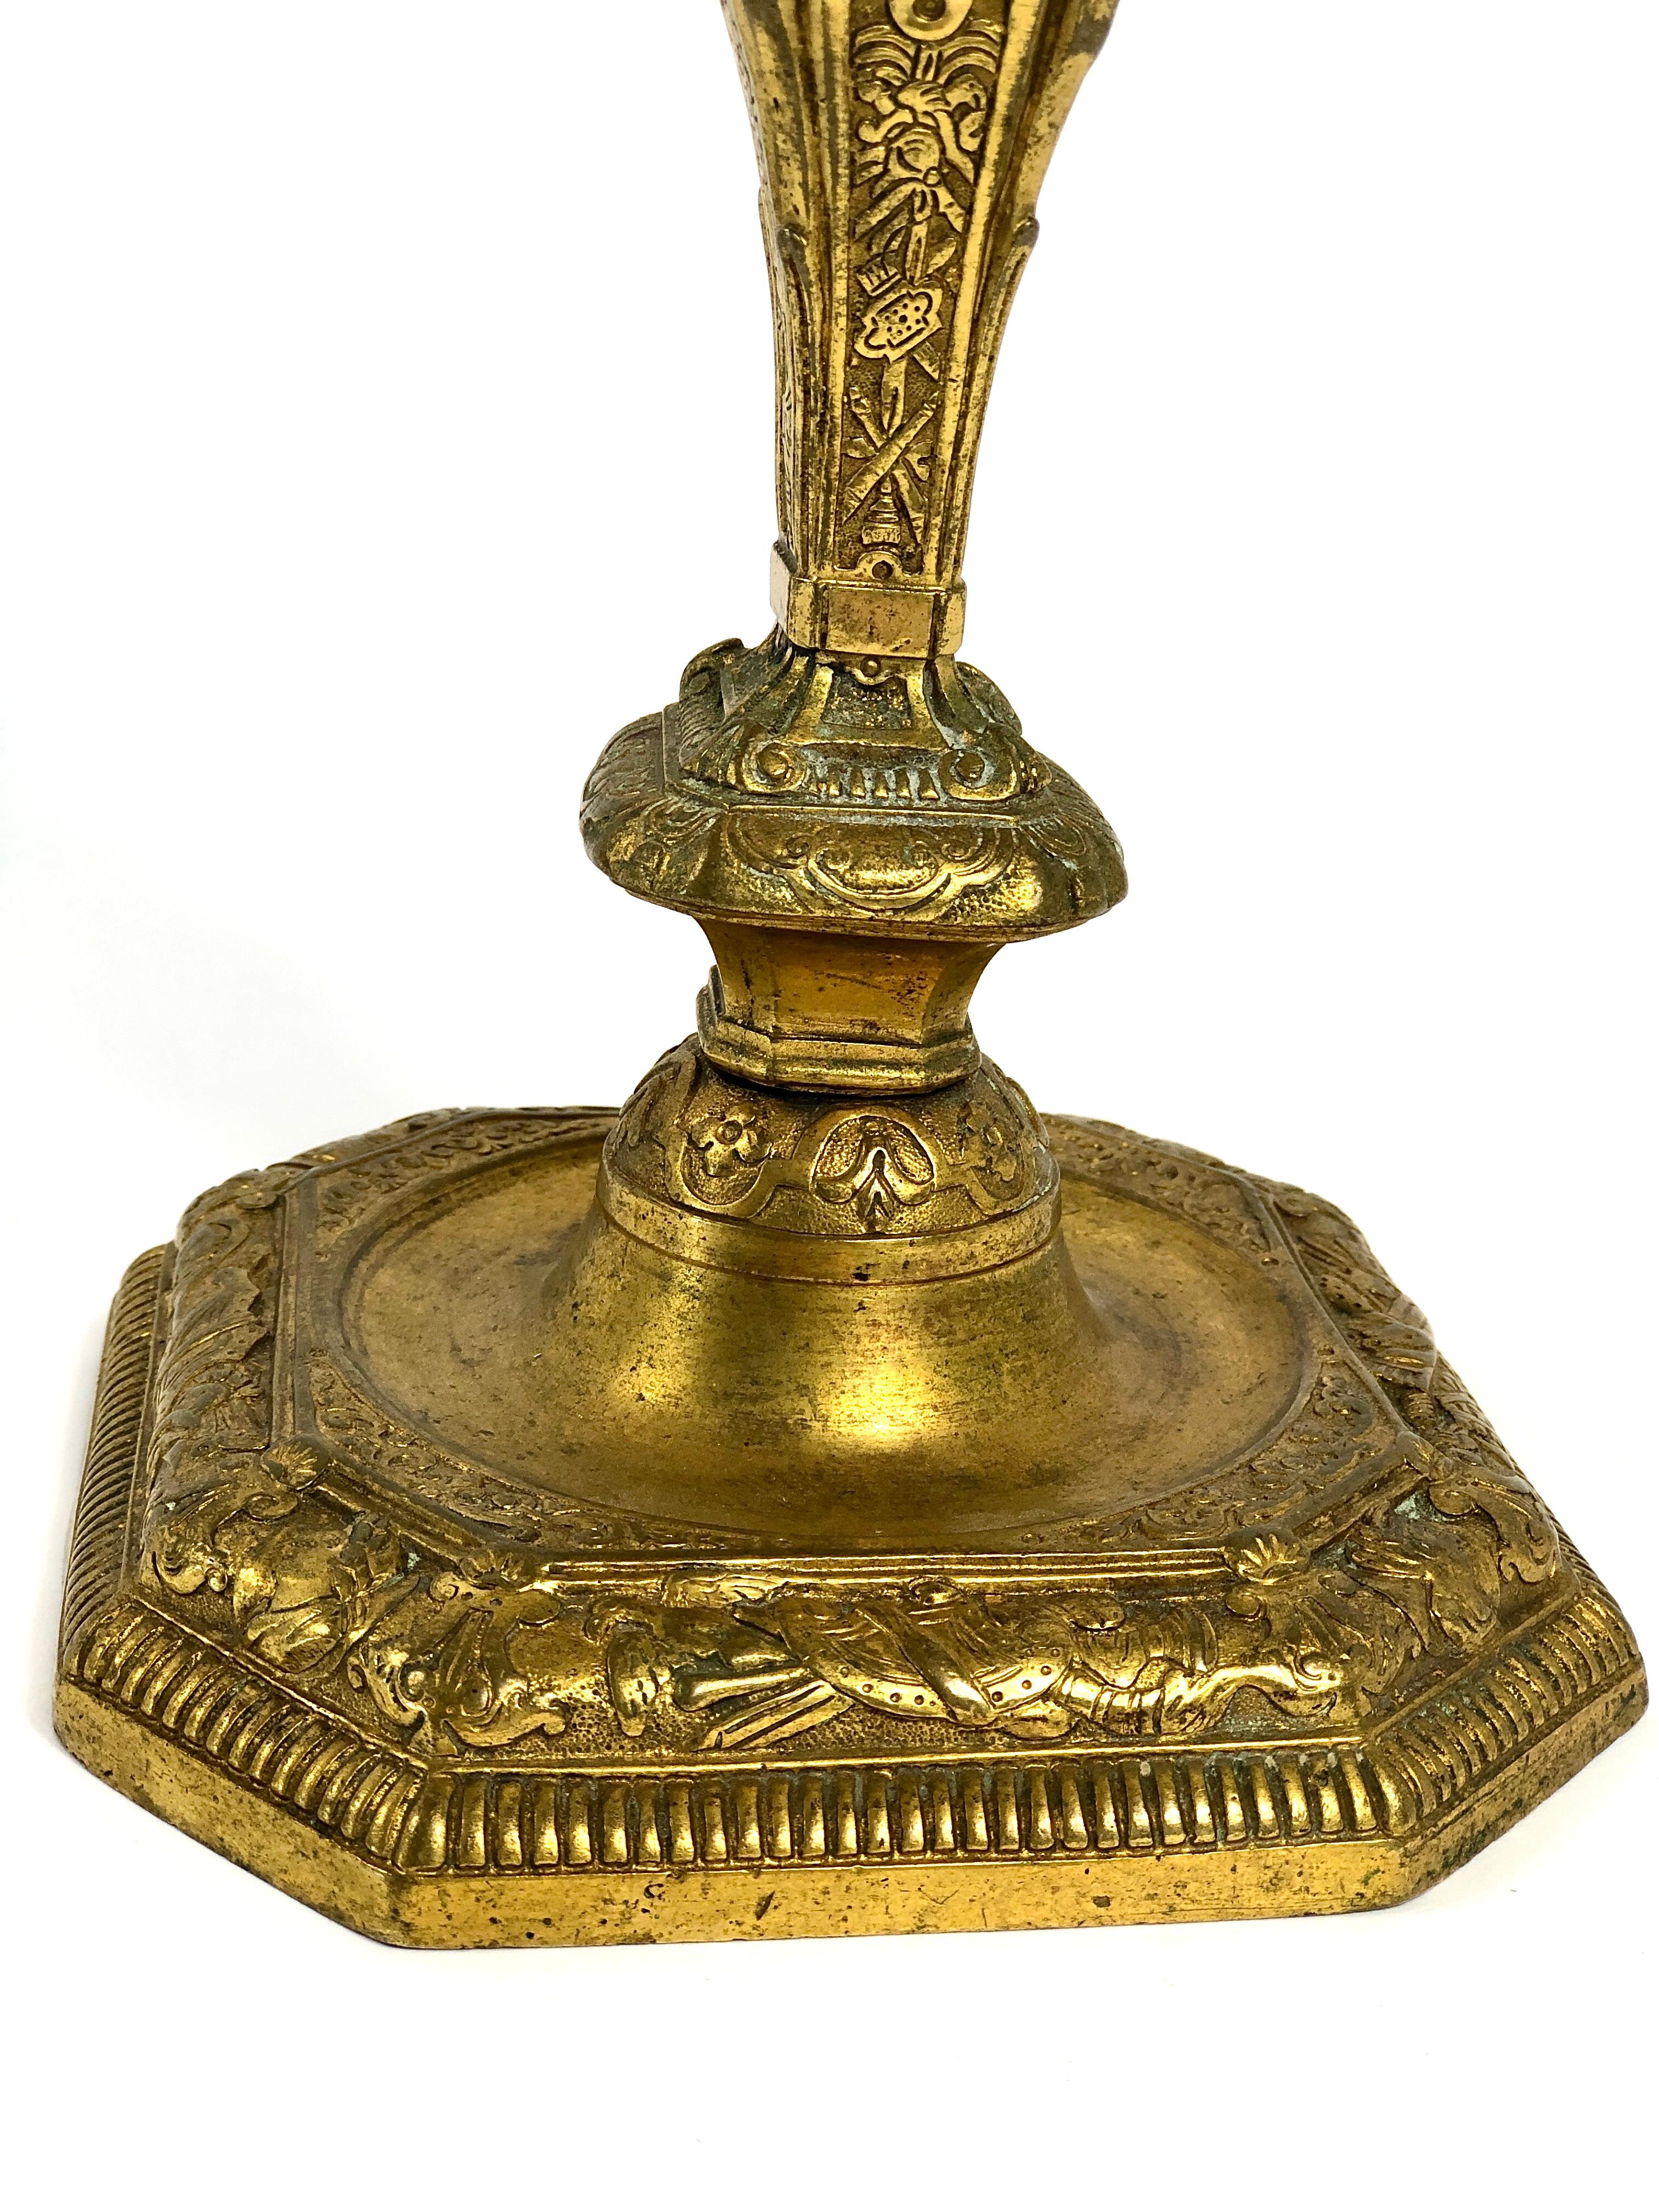 19th Century French Louis XIV Syle Gilt Bronze Candelabra For Sale 3